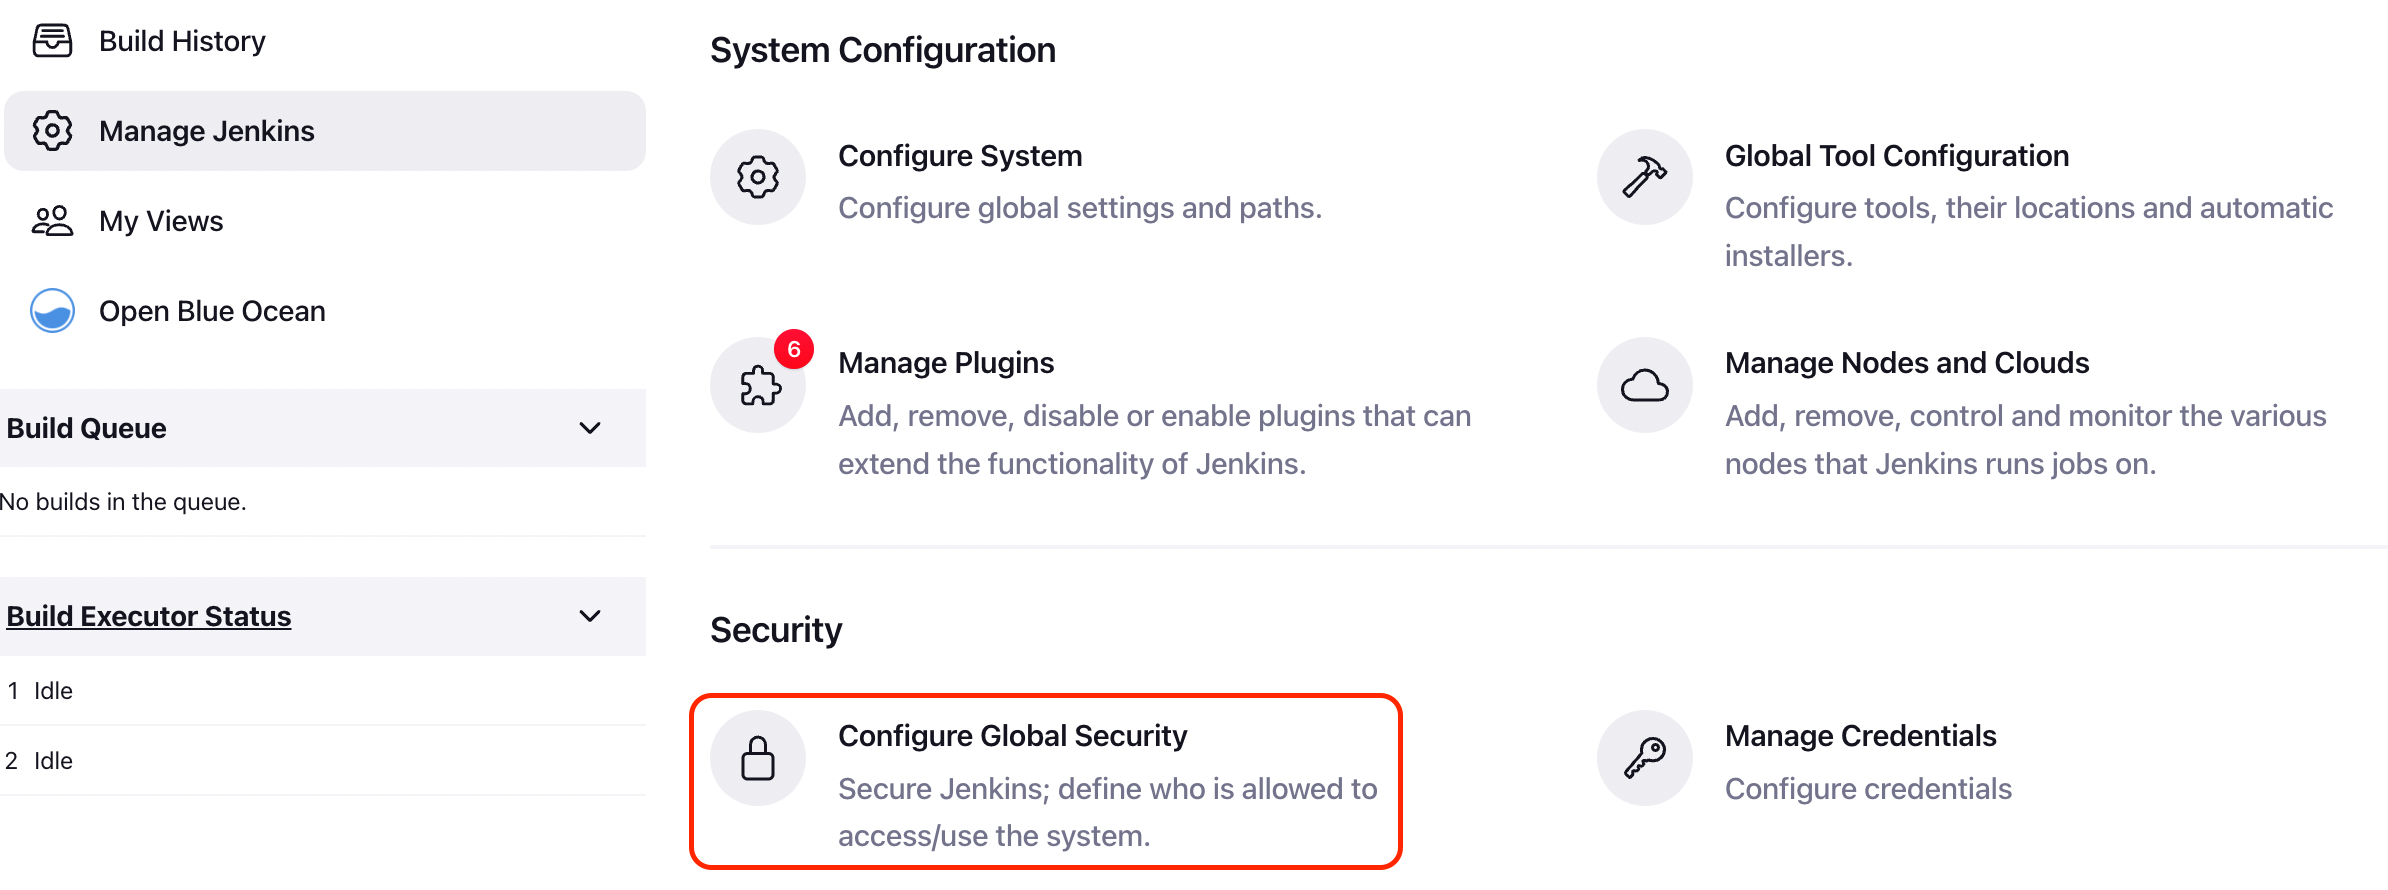 Configure Global Security